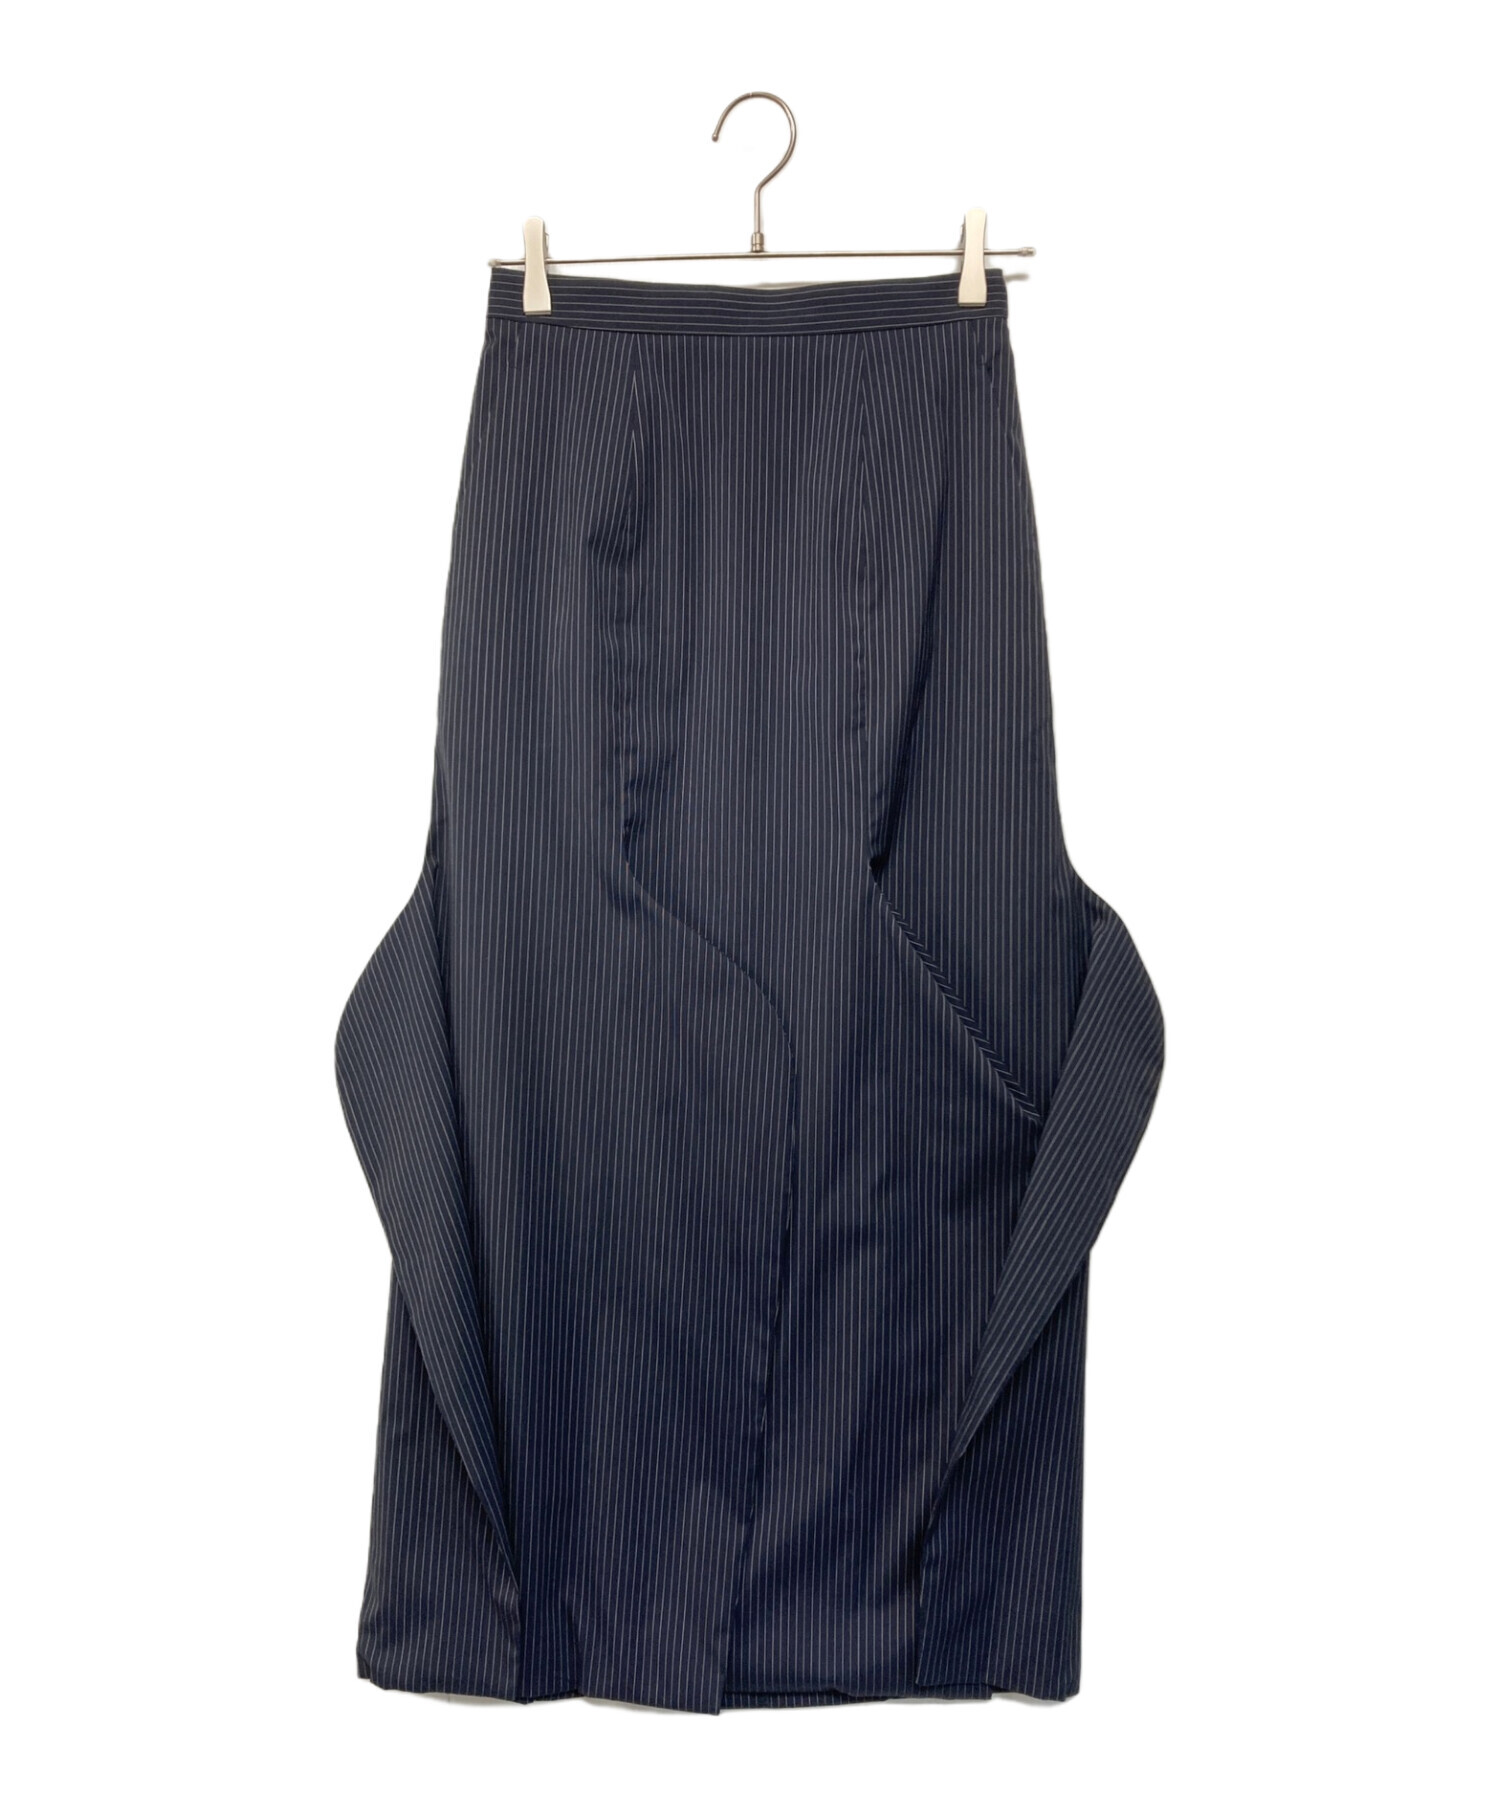 ENFOLD (エンフォルド) ストライプロングスカート ネイビー サイズ:SIZE 36